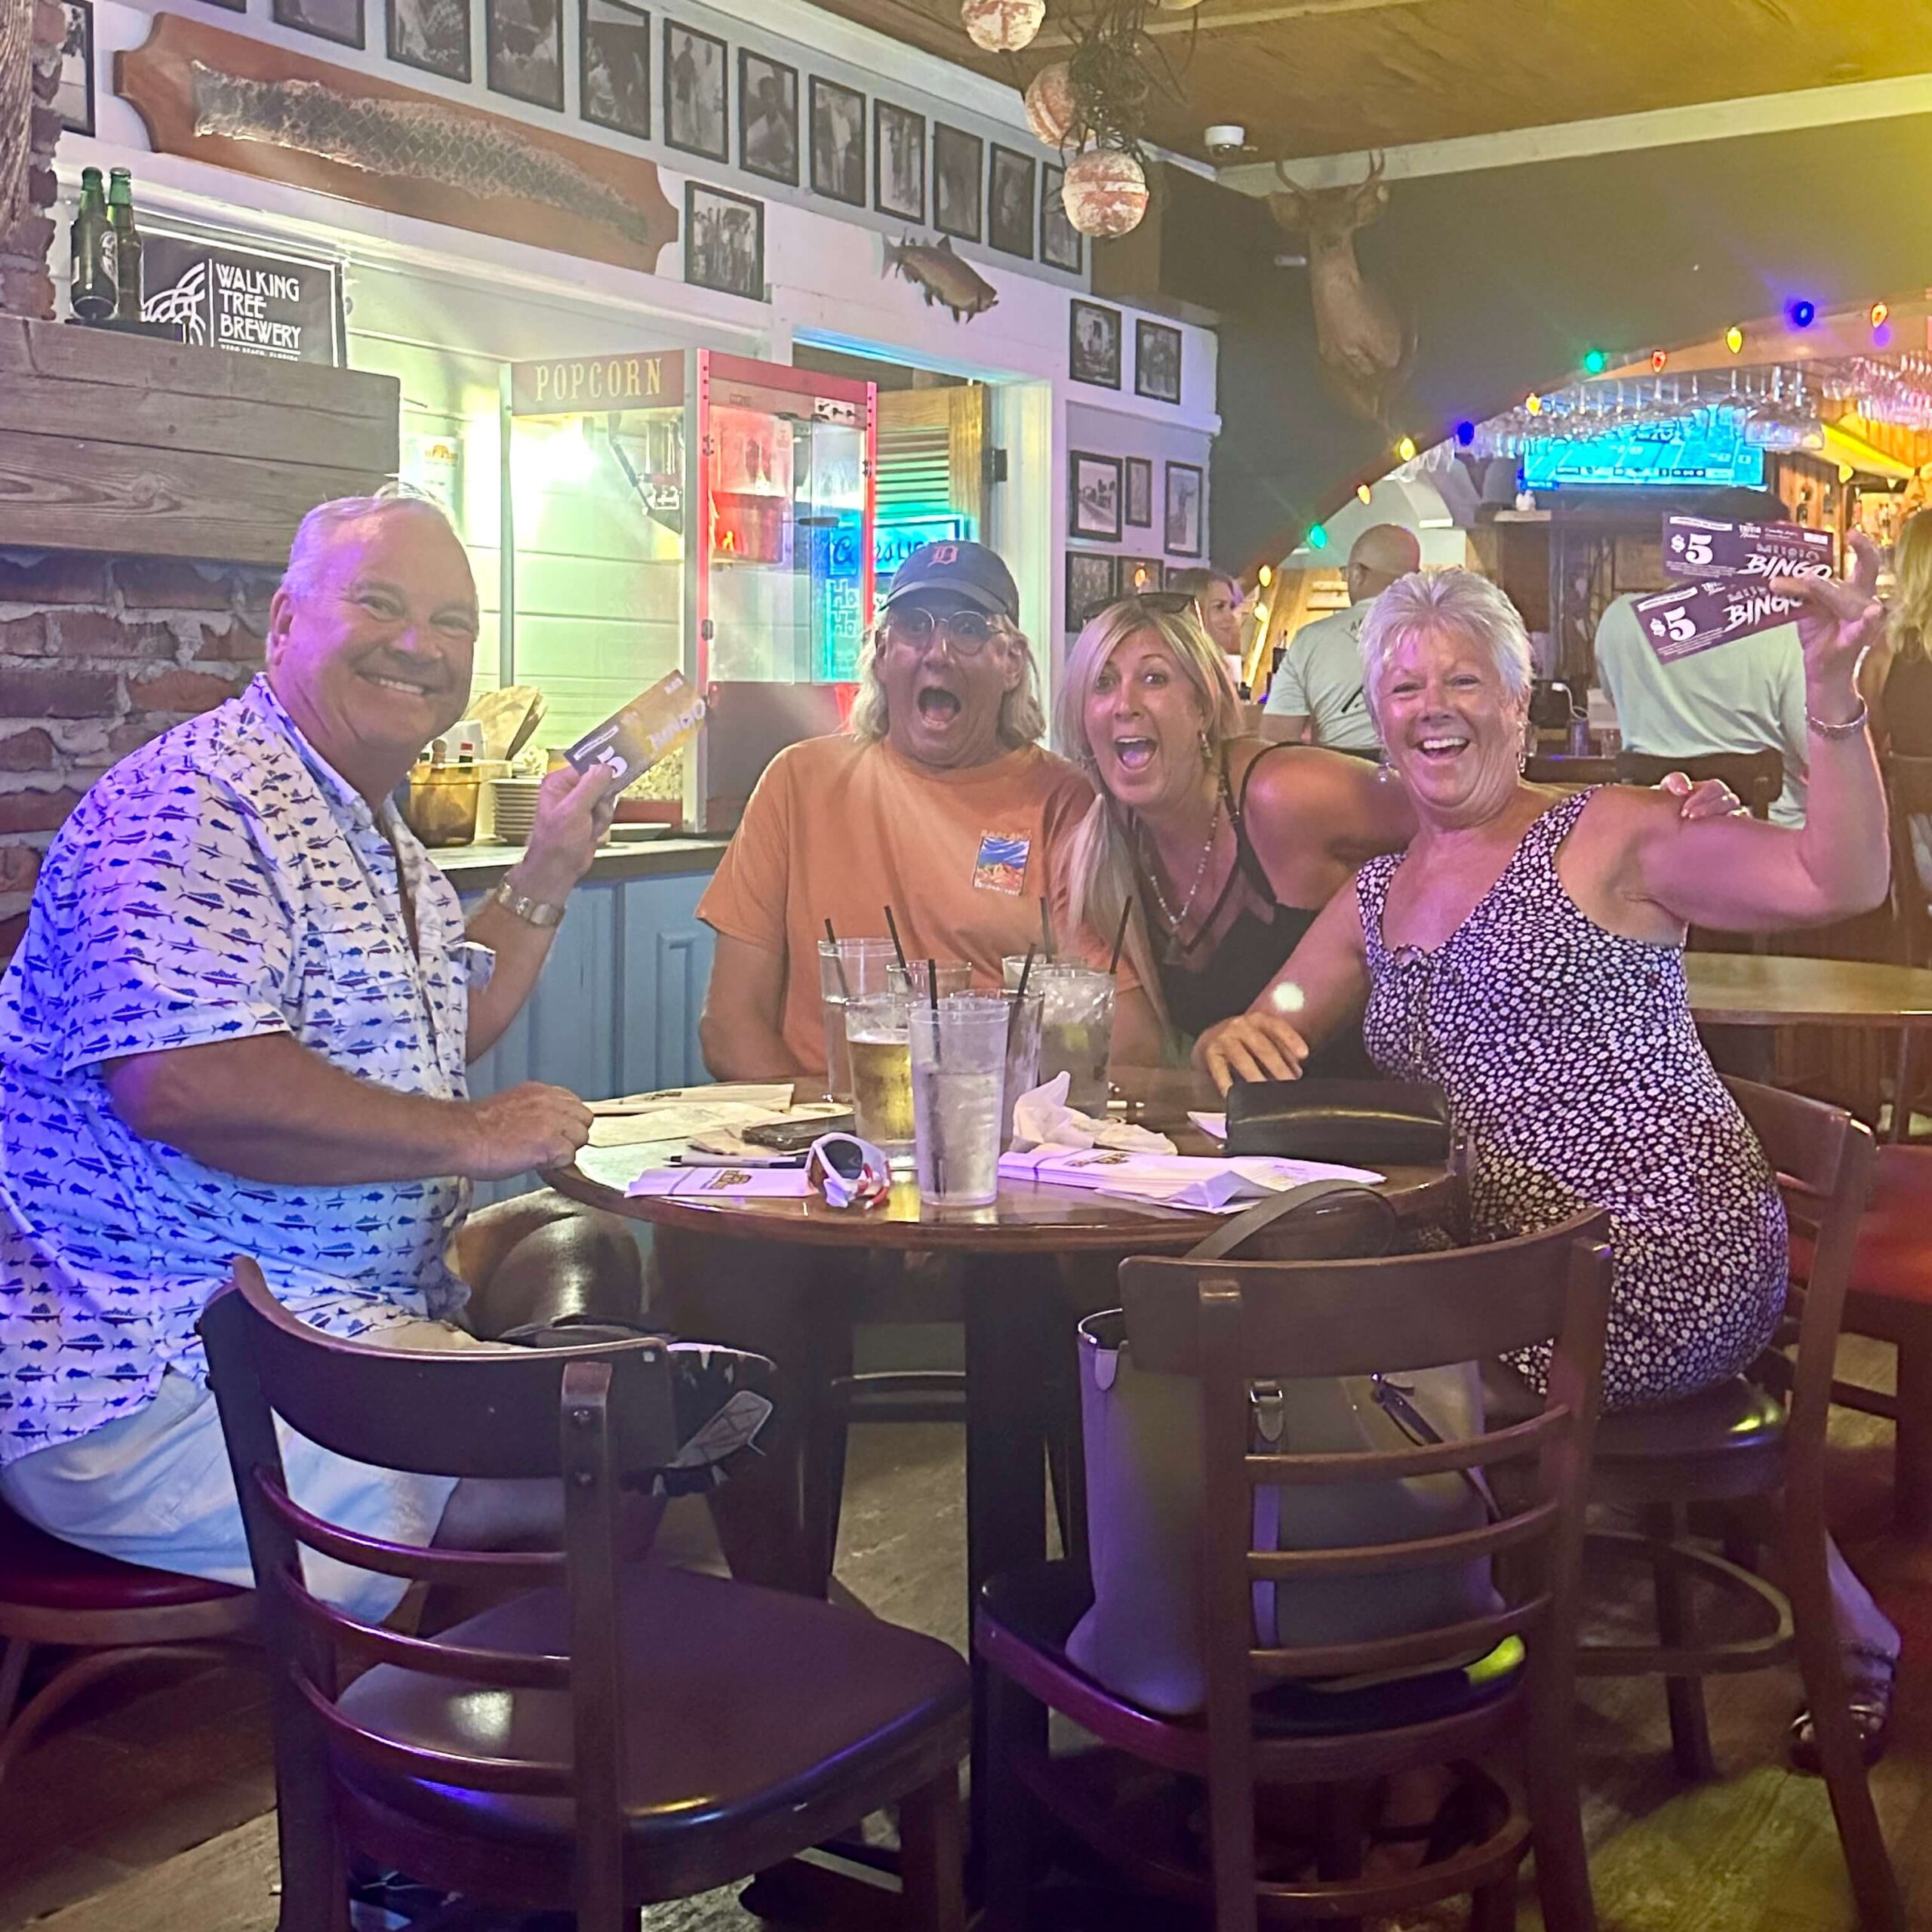 Conchy Joe's Seafood Jensen Beach FL 34957 trivia night 12